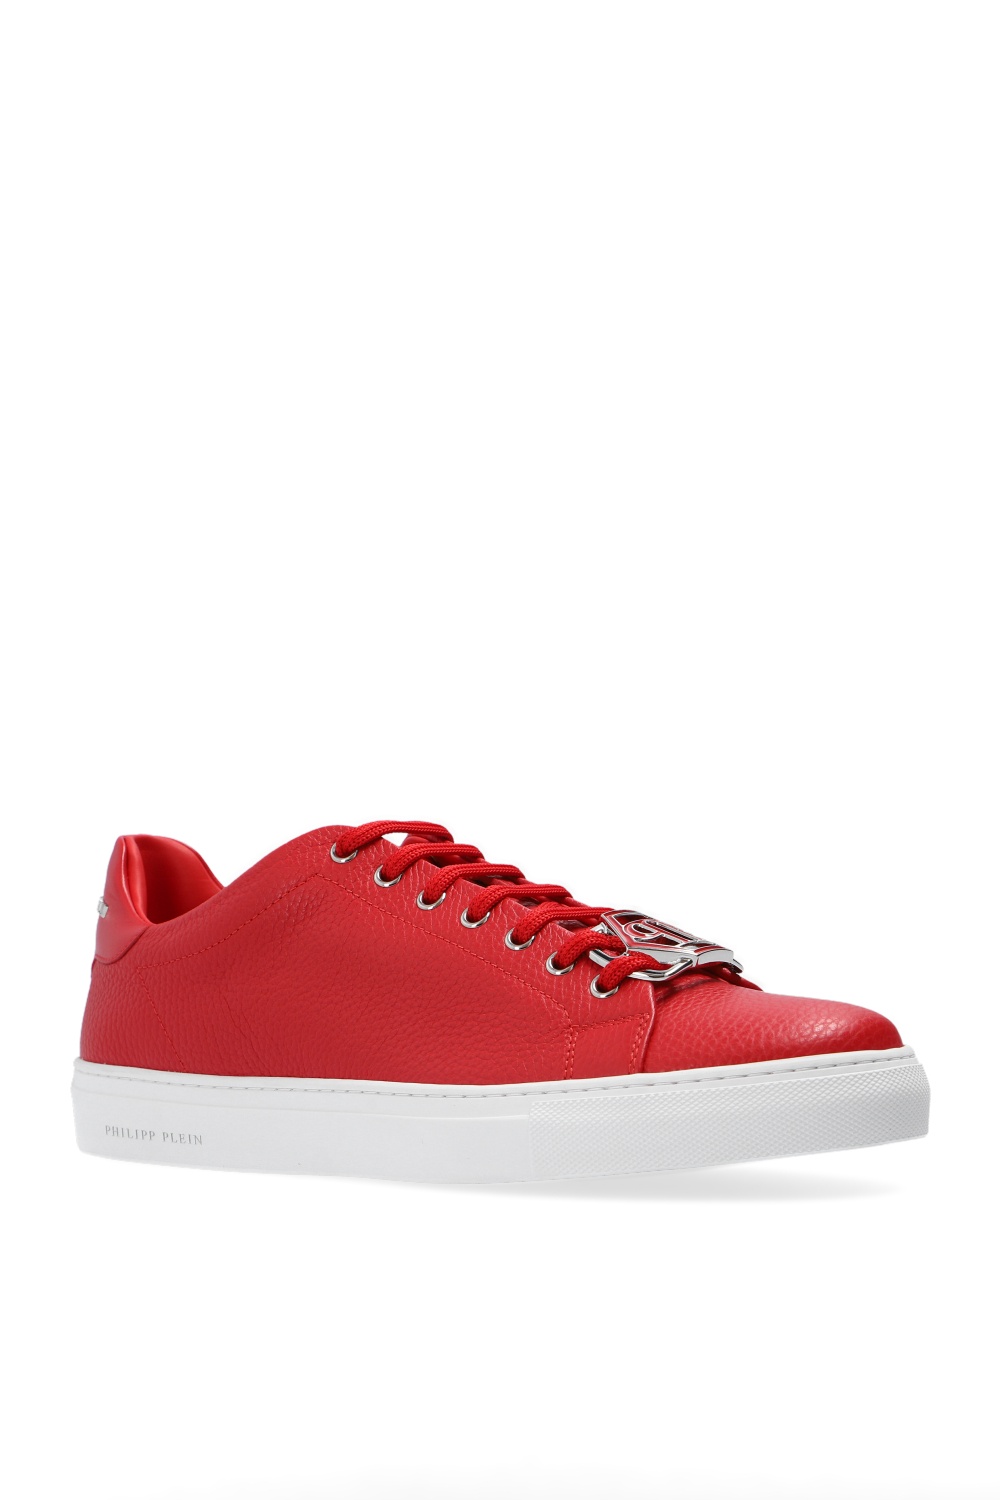 philipp plein shoes red